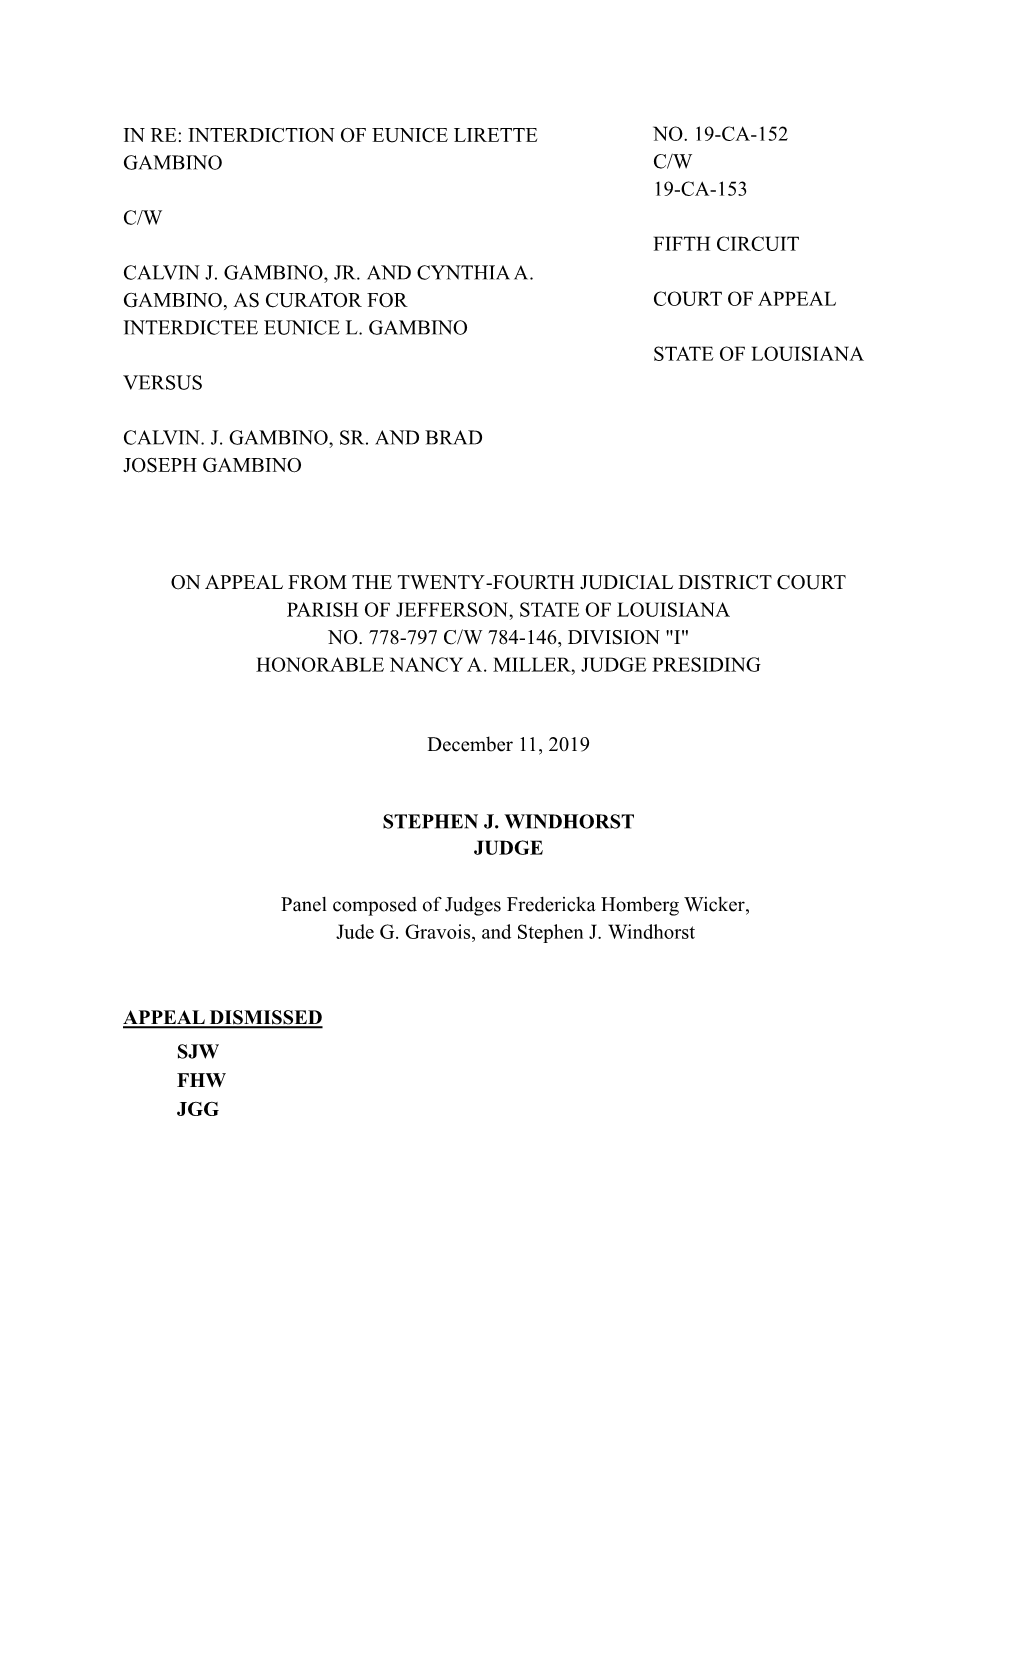 No. 19-Ca-152 C/W 19-Ca-153 Fifth Circuit Court of Appeal State of Louisiana in Re: Interdiction of Eunice Lirette Gambino